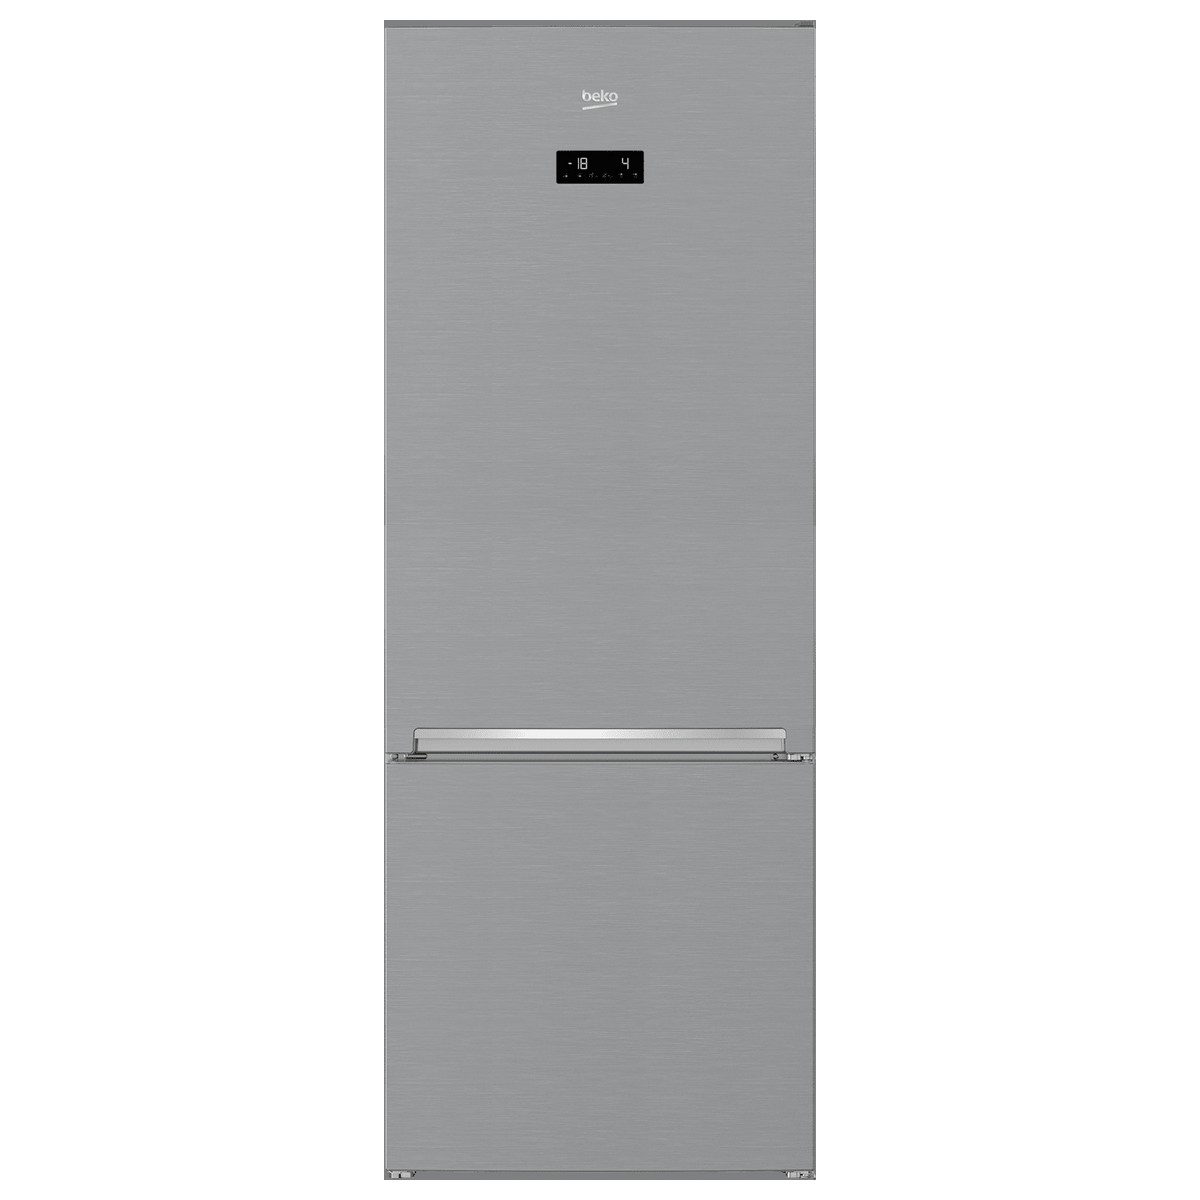 Холодильник Beko с нижн. мороз., 192x70x75, холод.отд.-356л, мороз.отд.-145л, 2дв., А++, NF, диспл